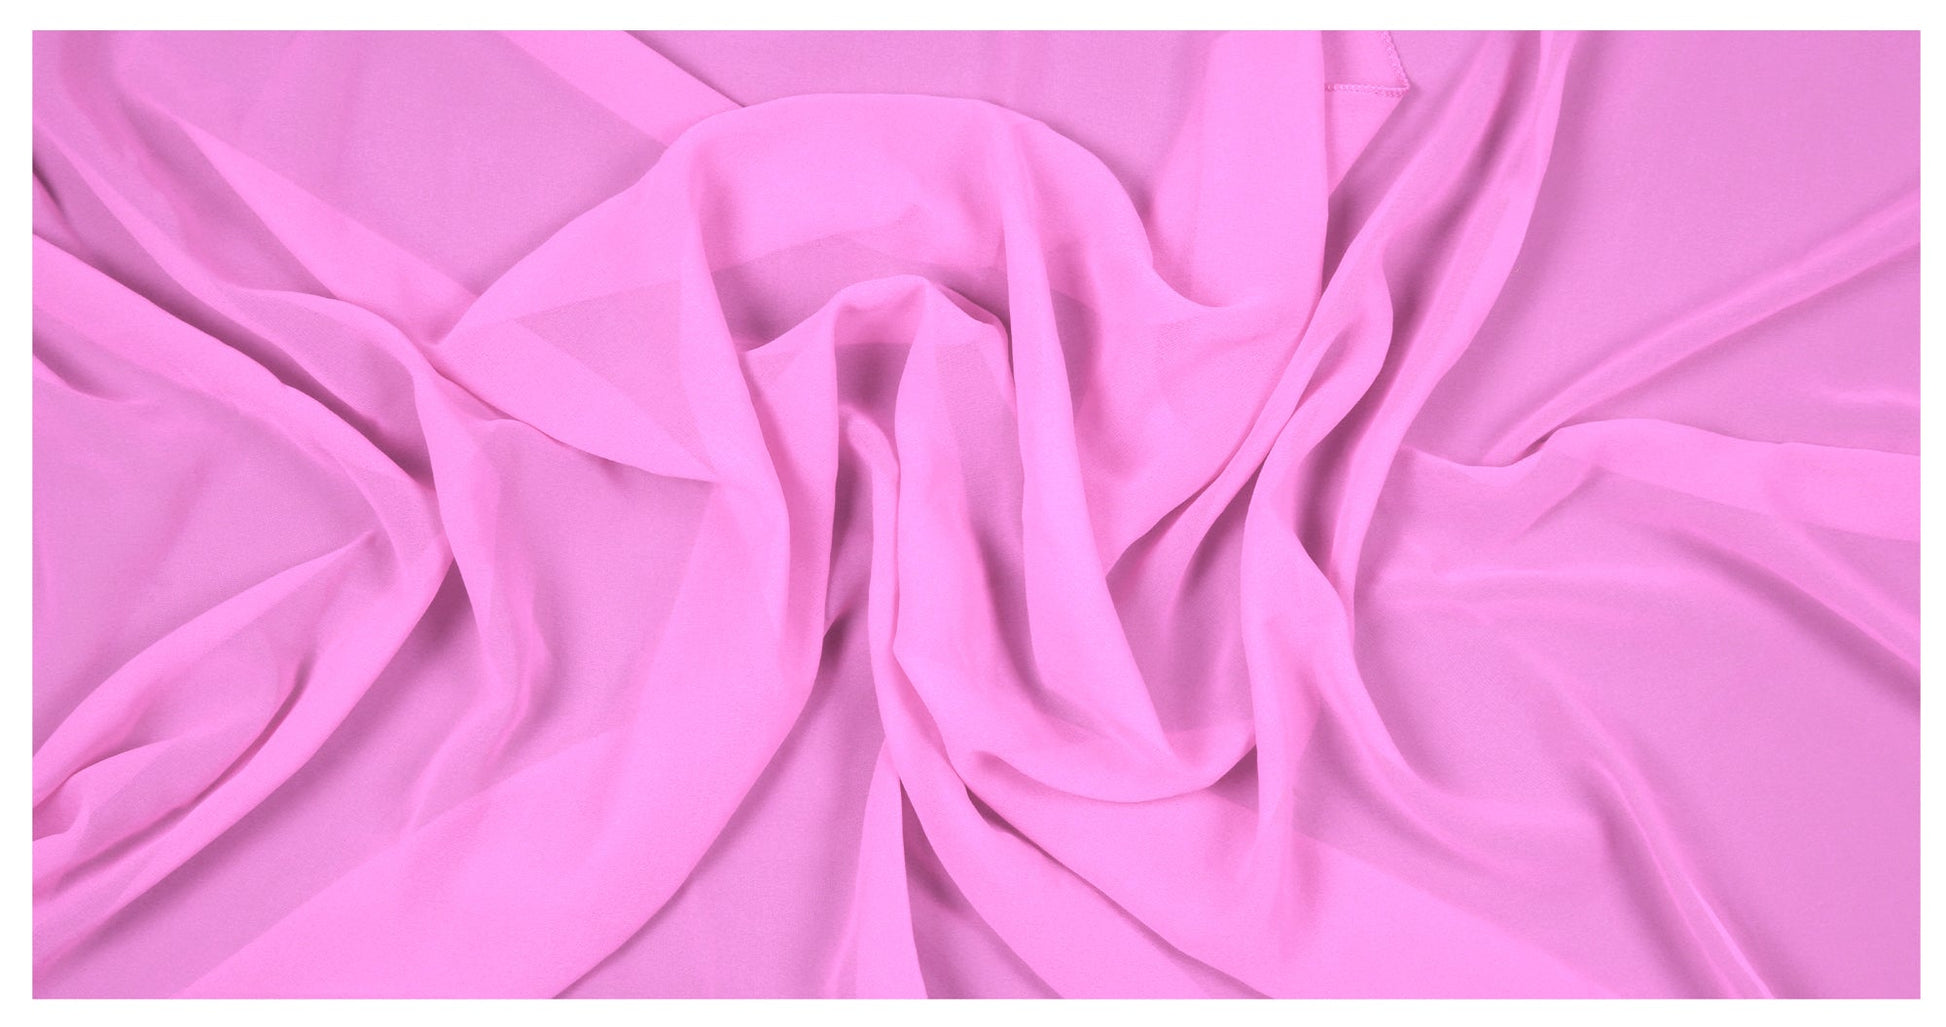 Bubblegum Pink,4ead361e-4cdb-46b9-b985-d570dfca52a4